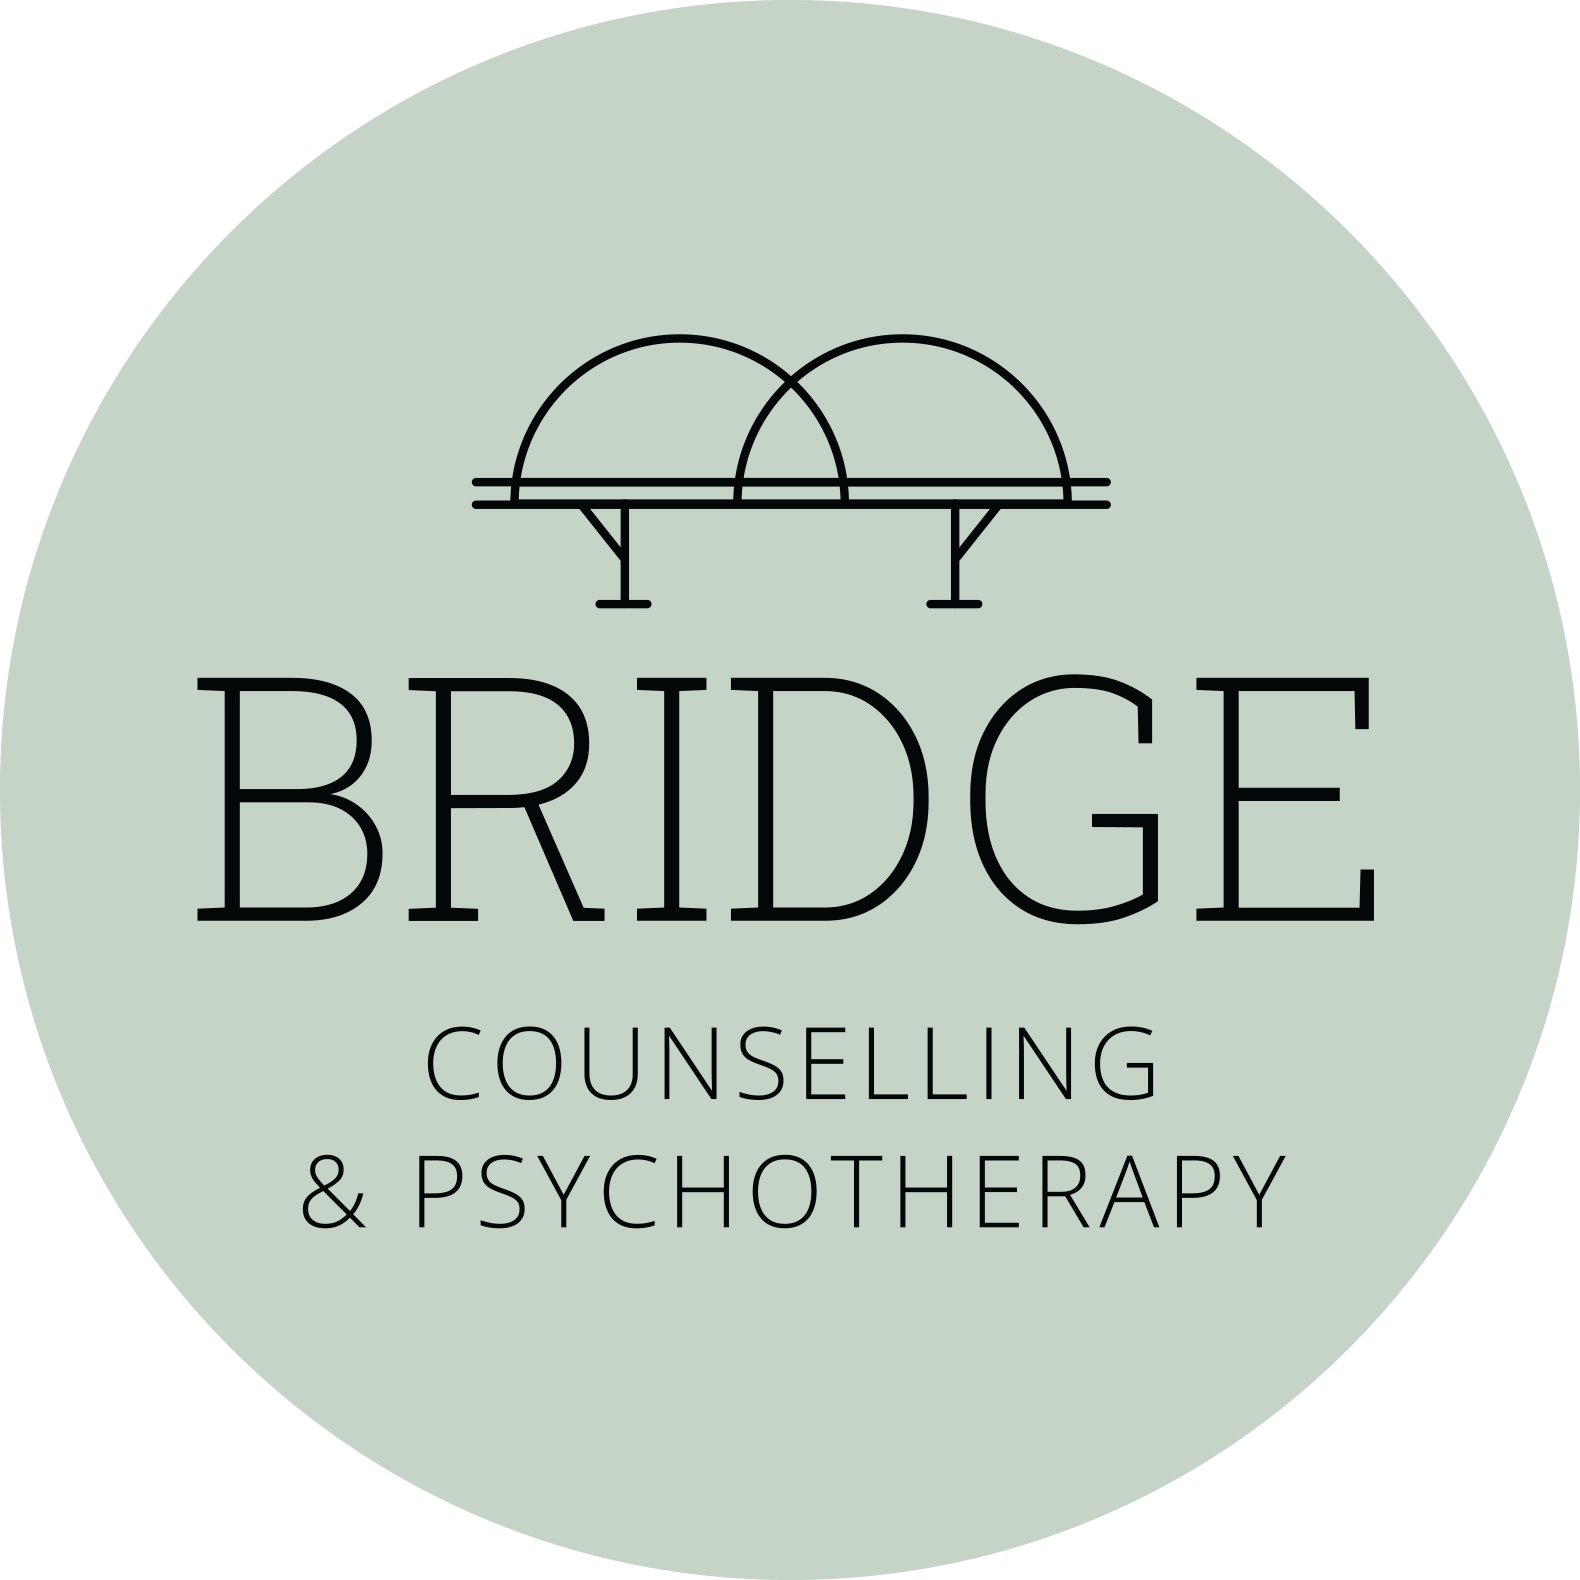 Bridge Counselling & Psychotherapy